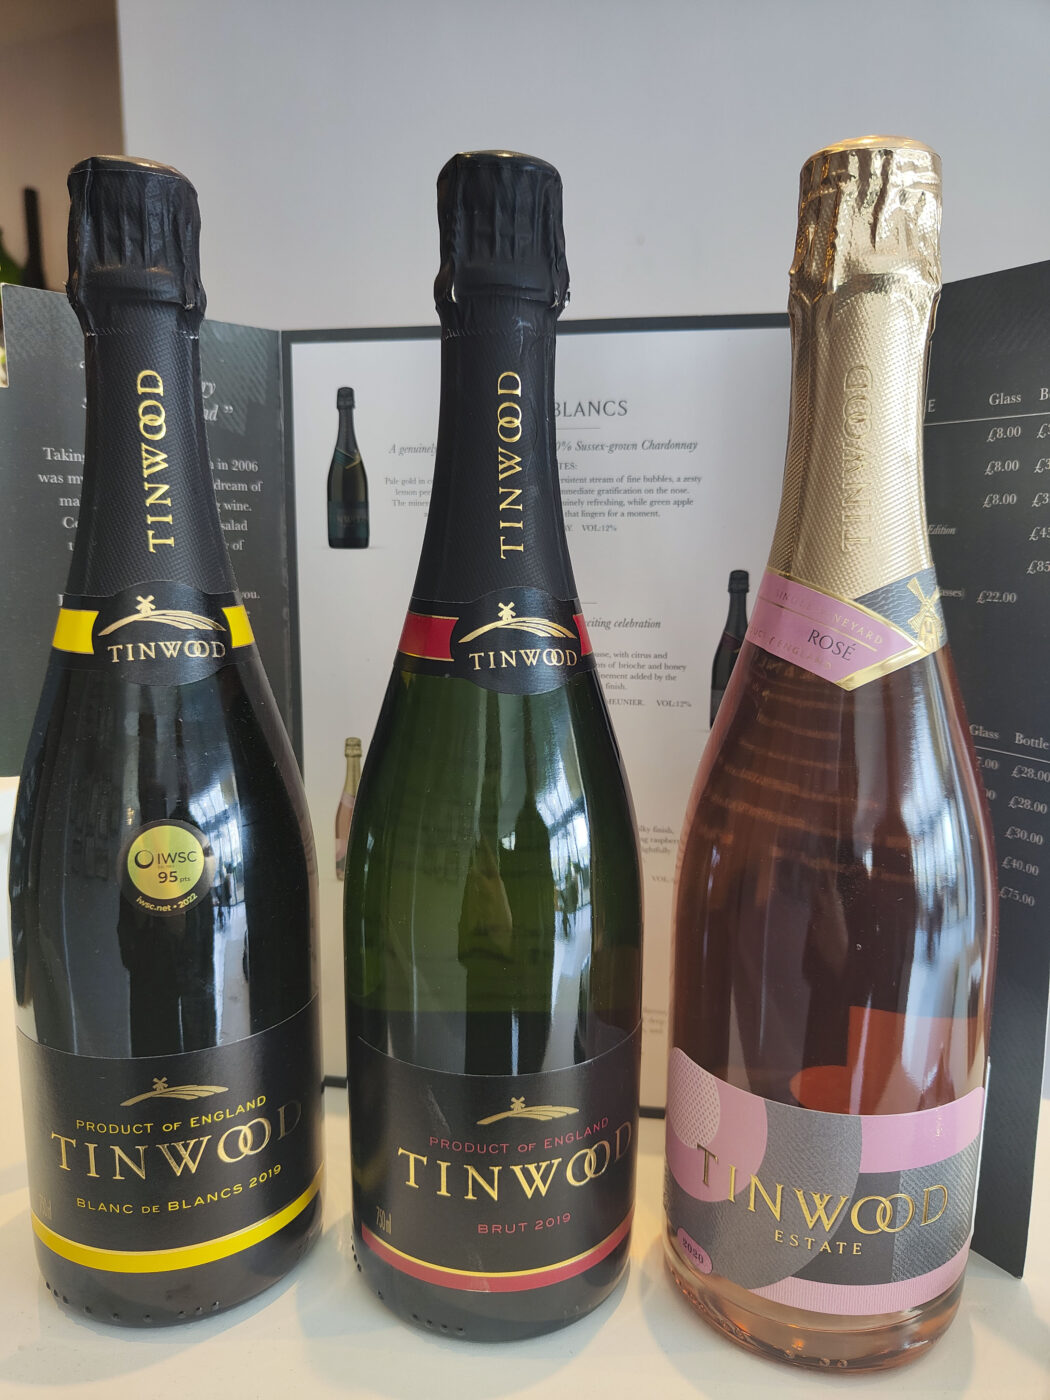 Tinwood estate wine tasting in uk